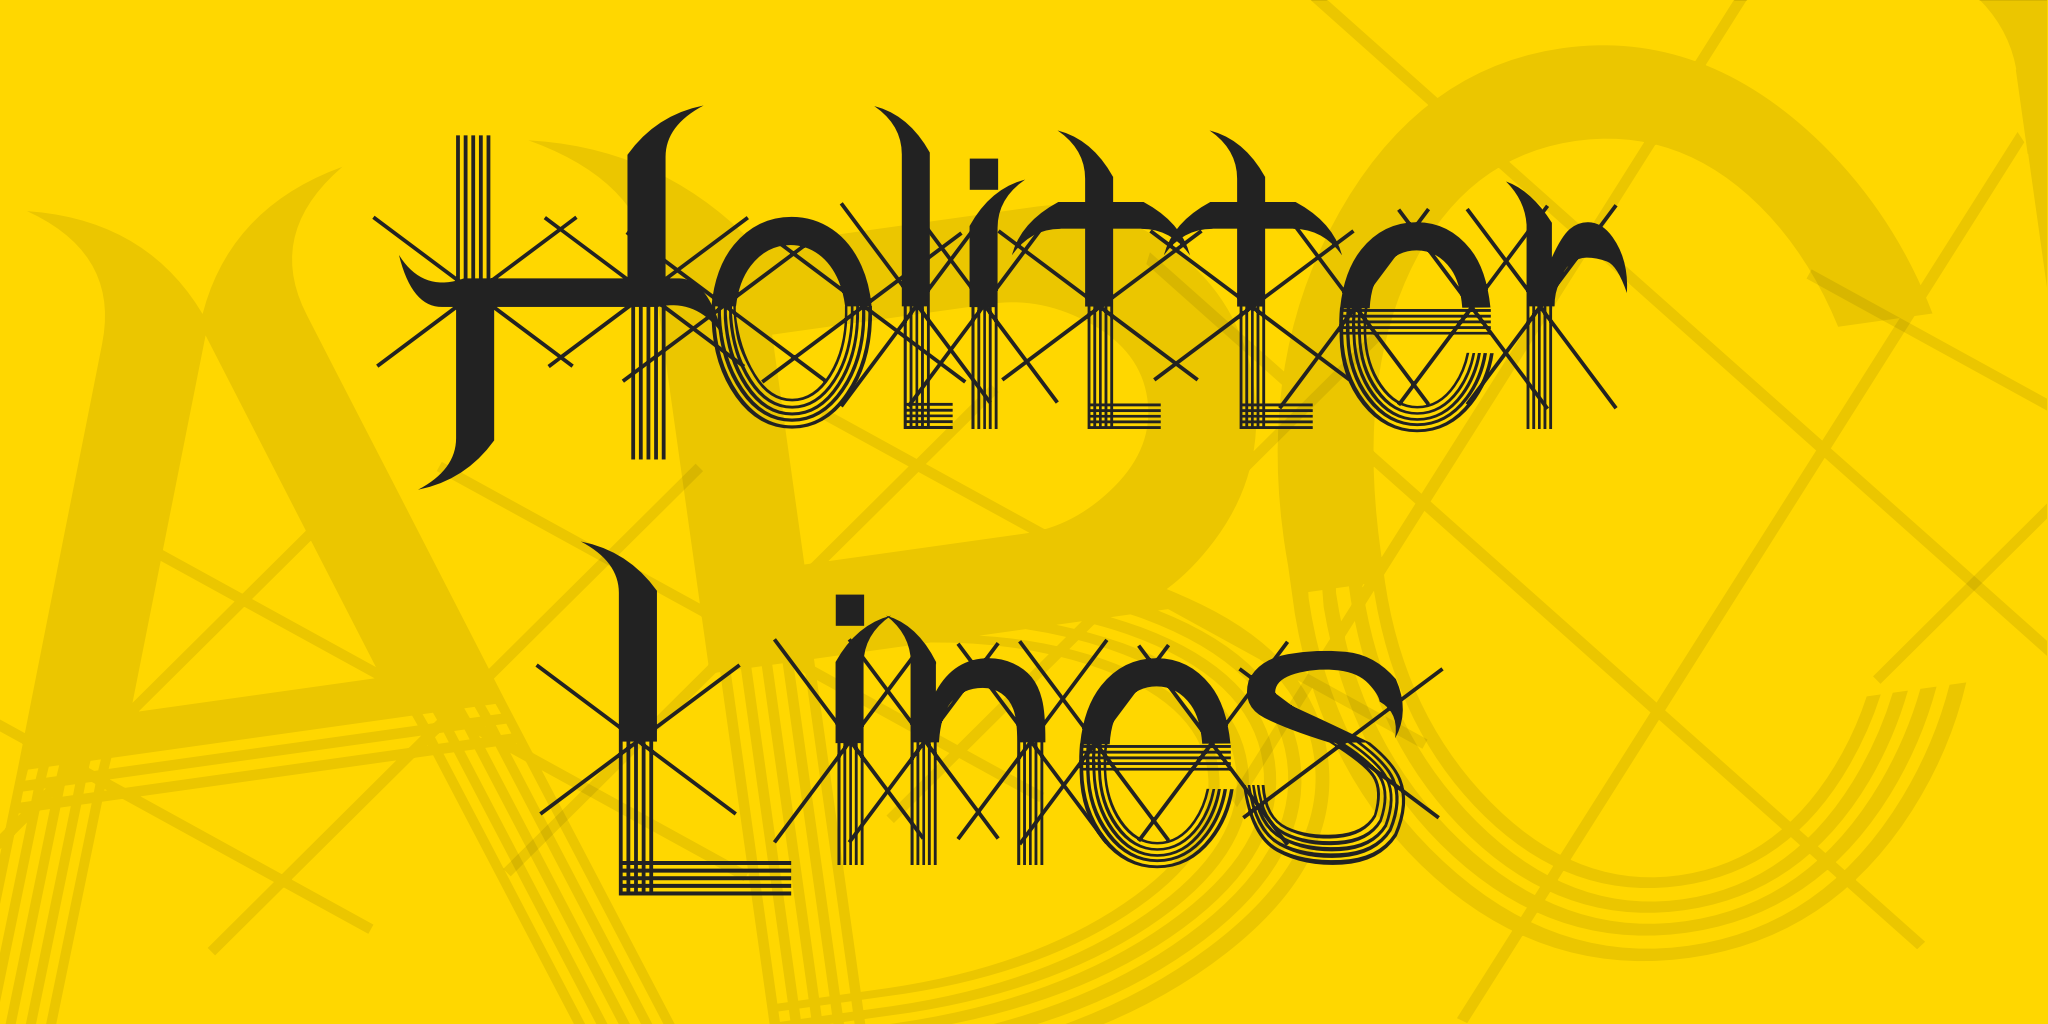 Holitter Lines